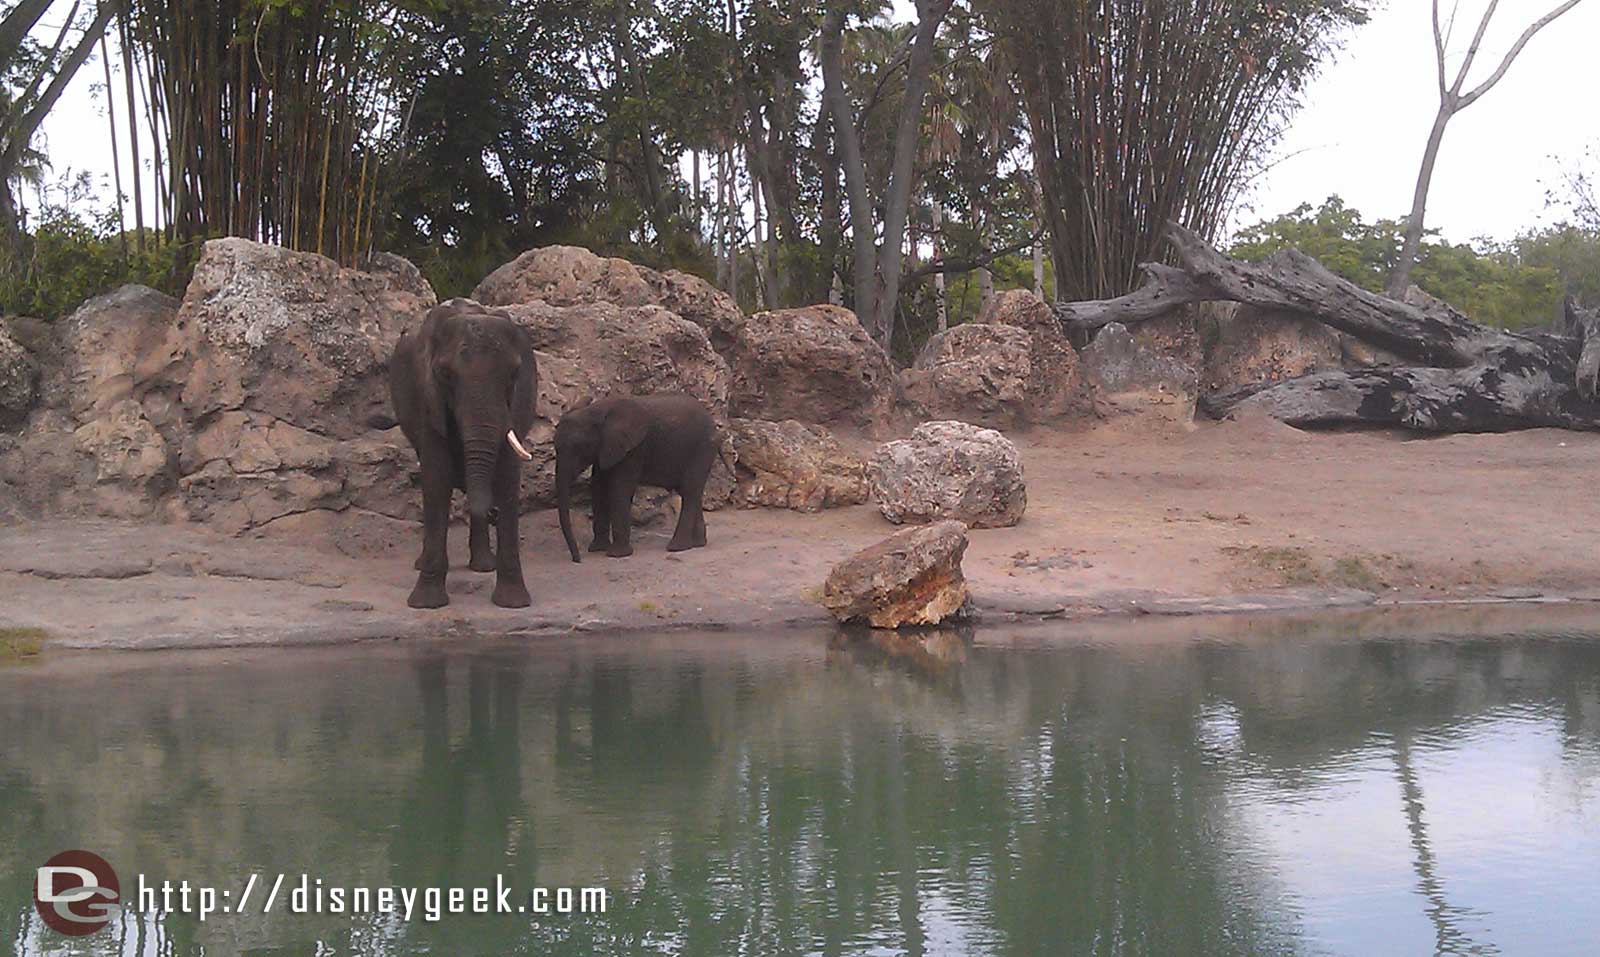 A couple Safari pictures.. some elephants